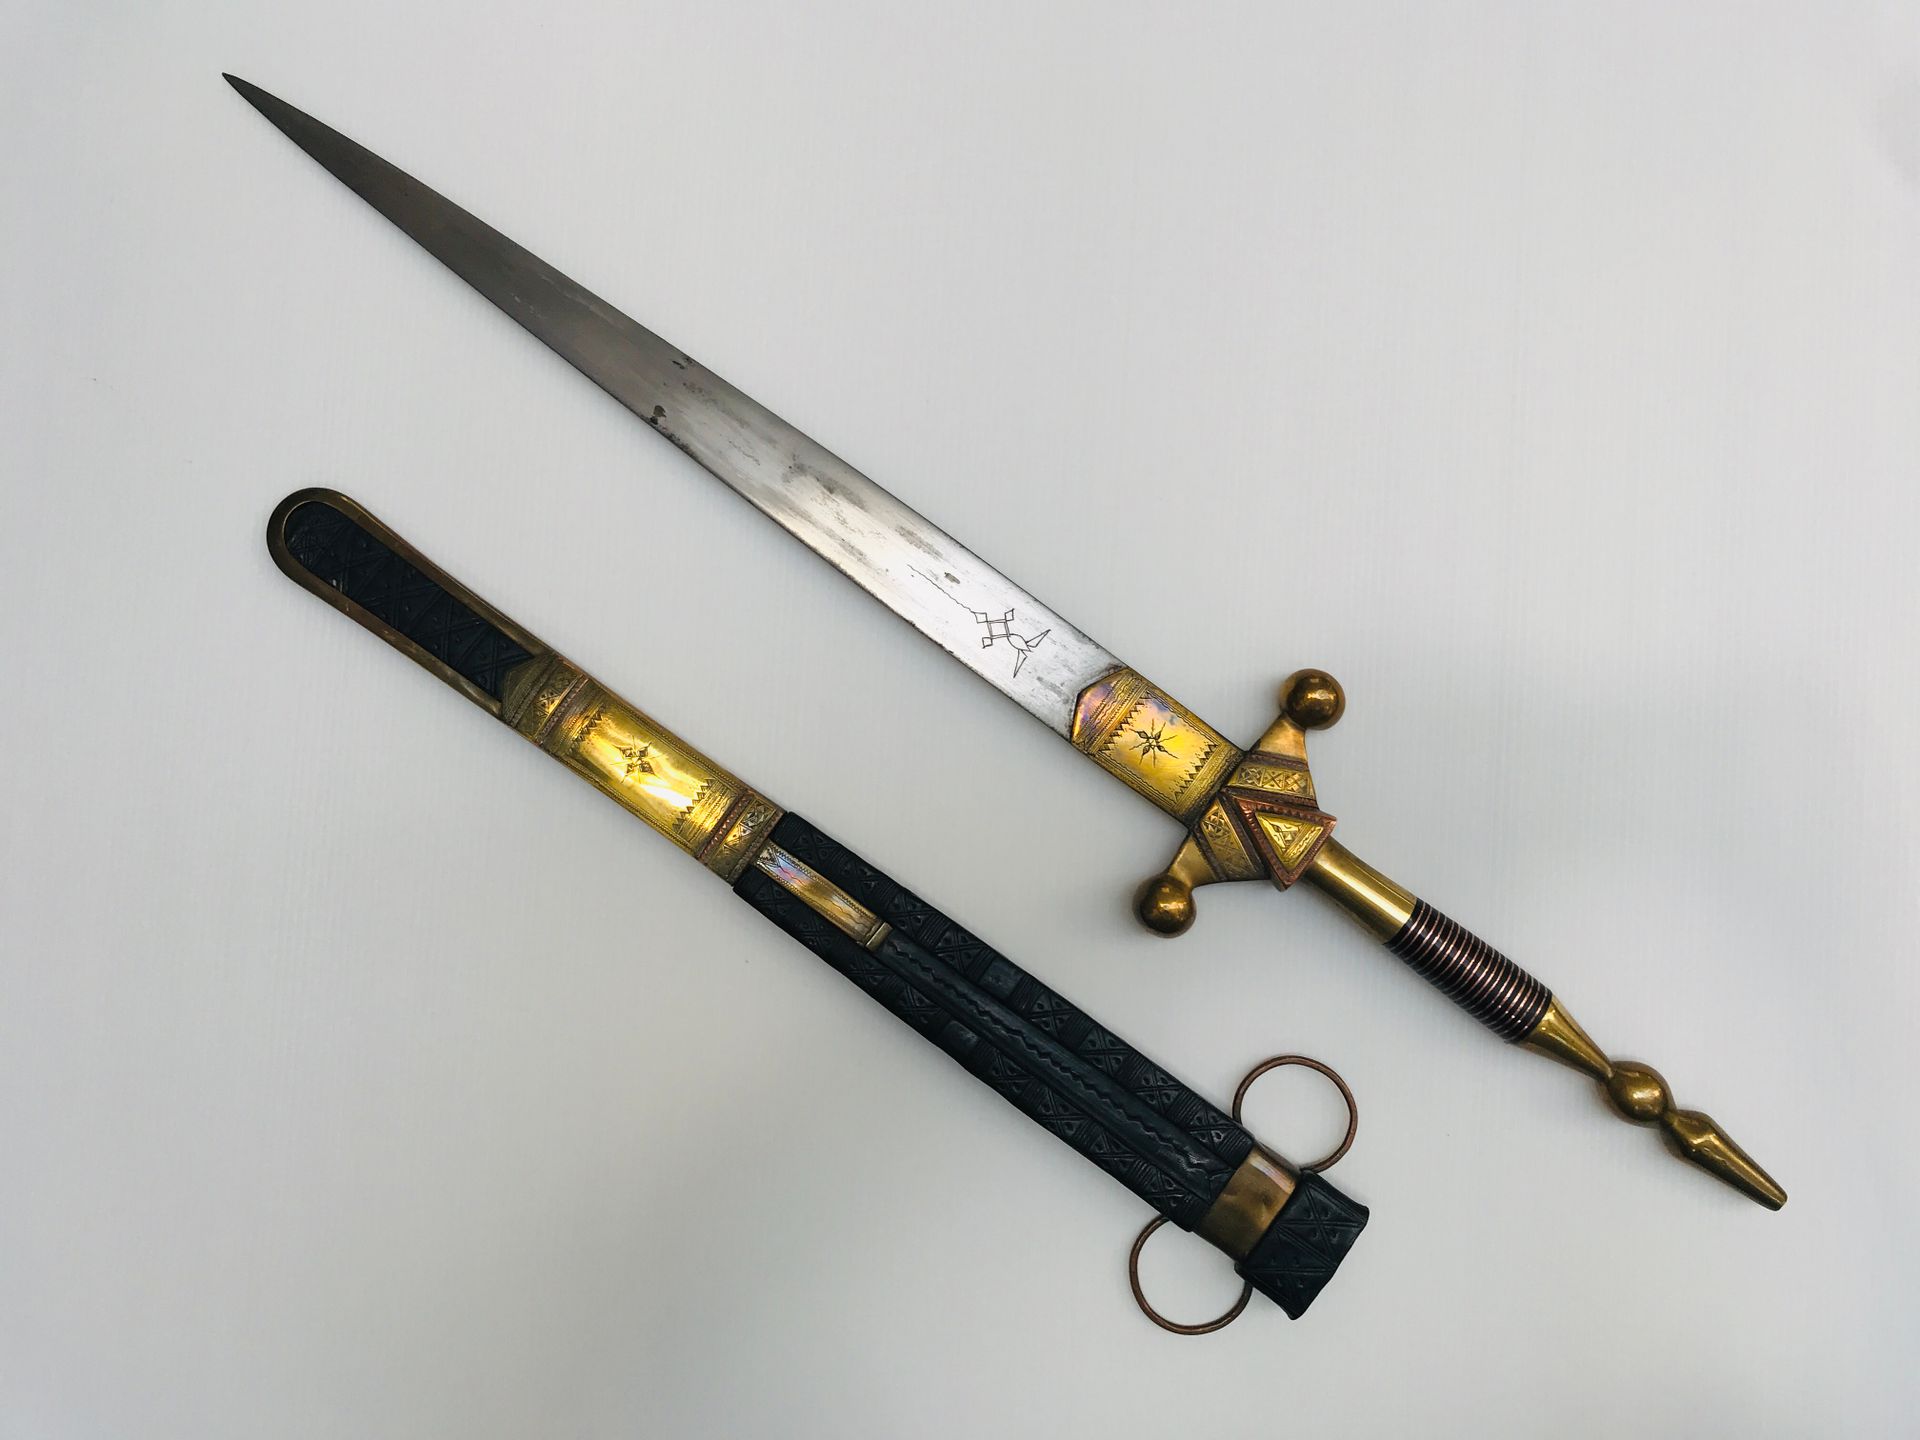 Épée touareg Latón y cobre grabados, funda de cuero

L. 77 cm